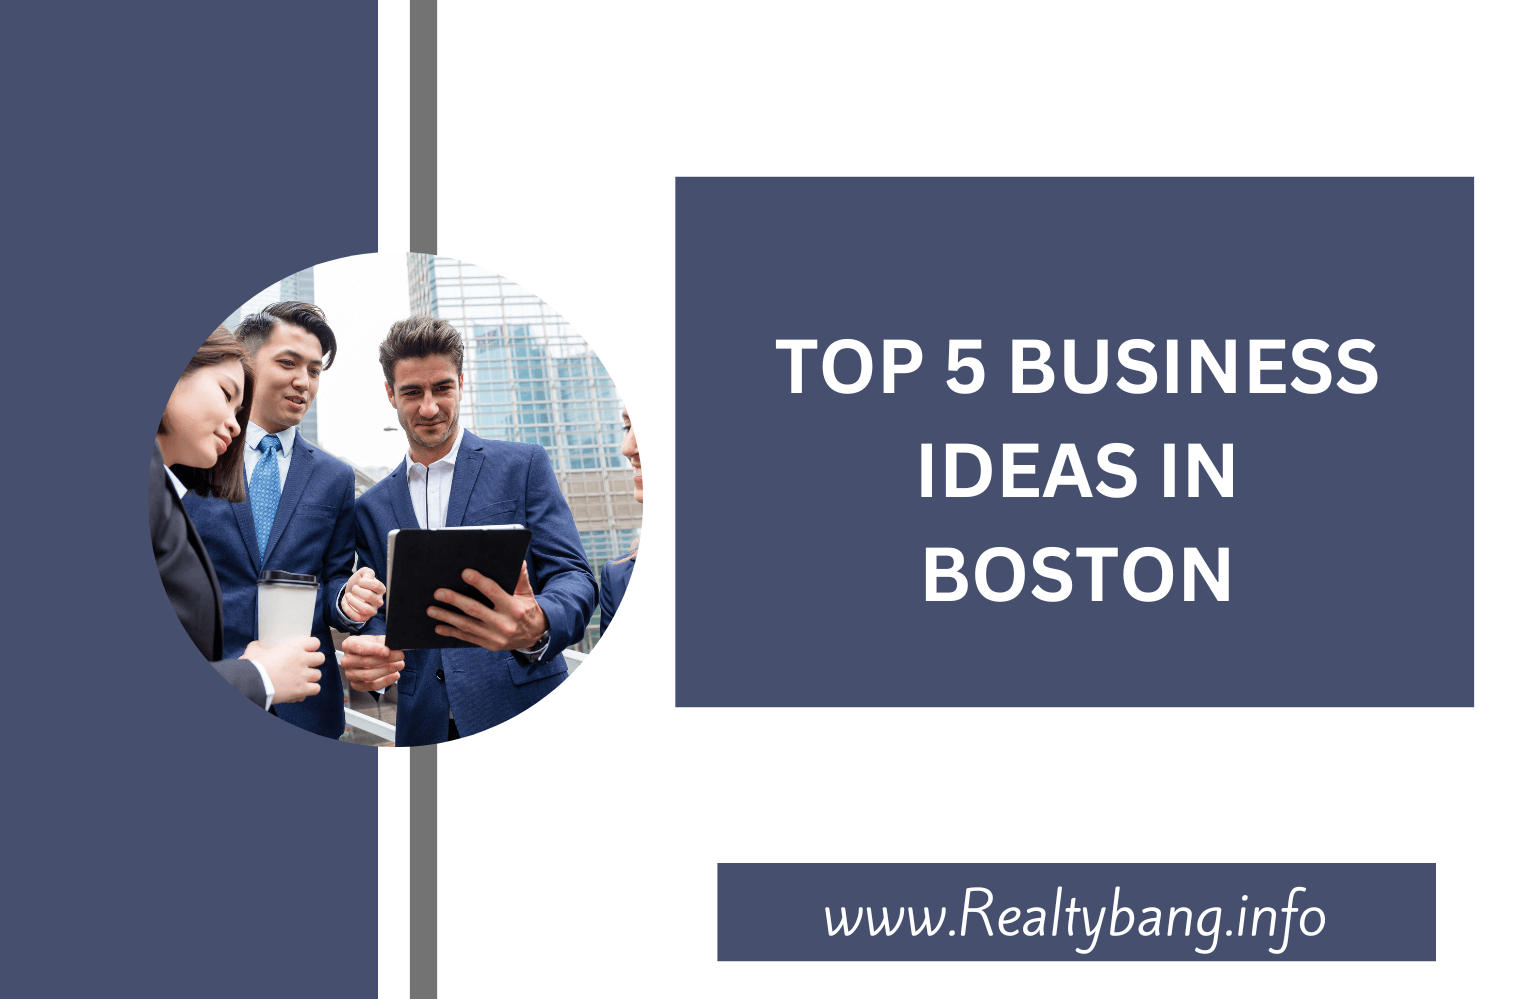 TOP 5 BUSINESS IDEAS IN BOSTON